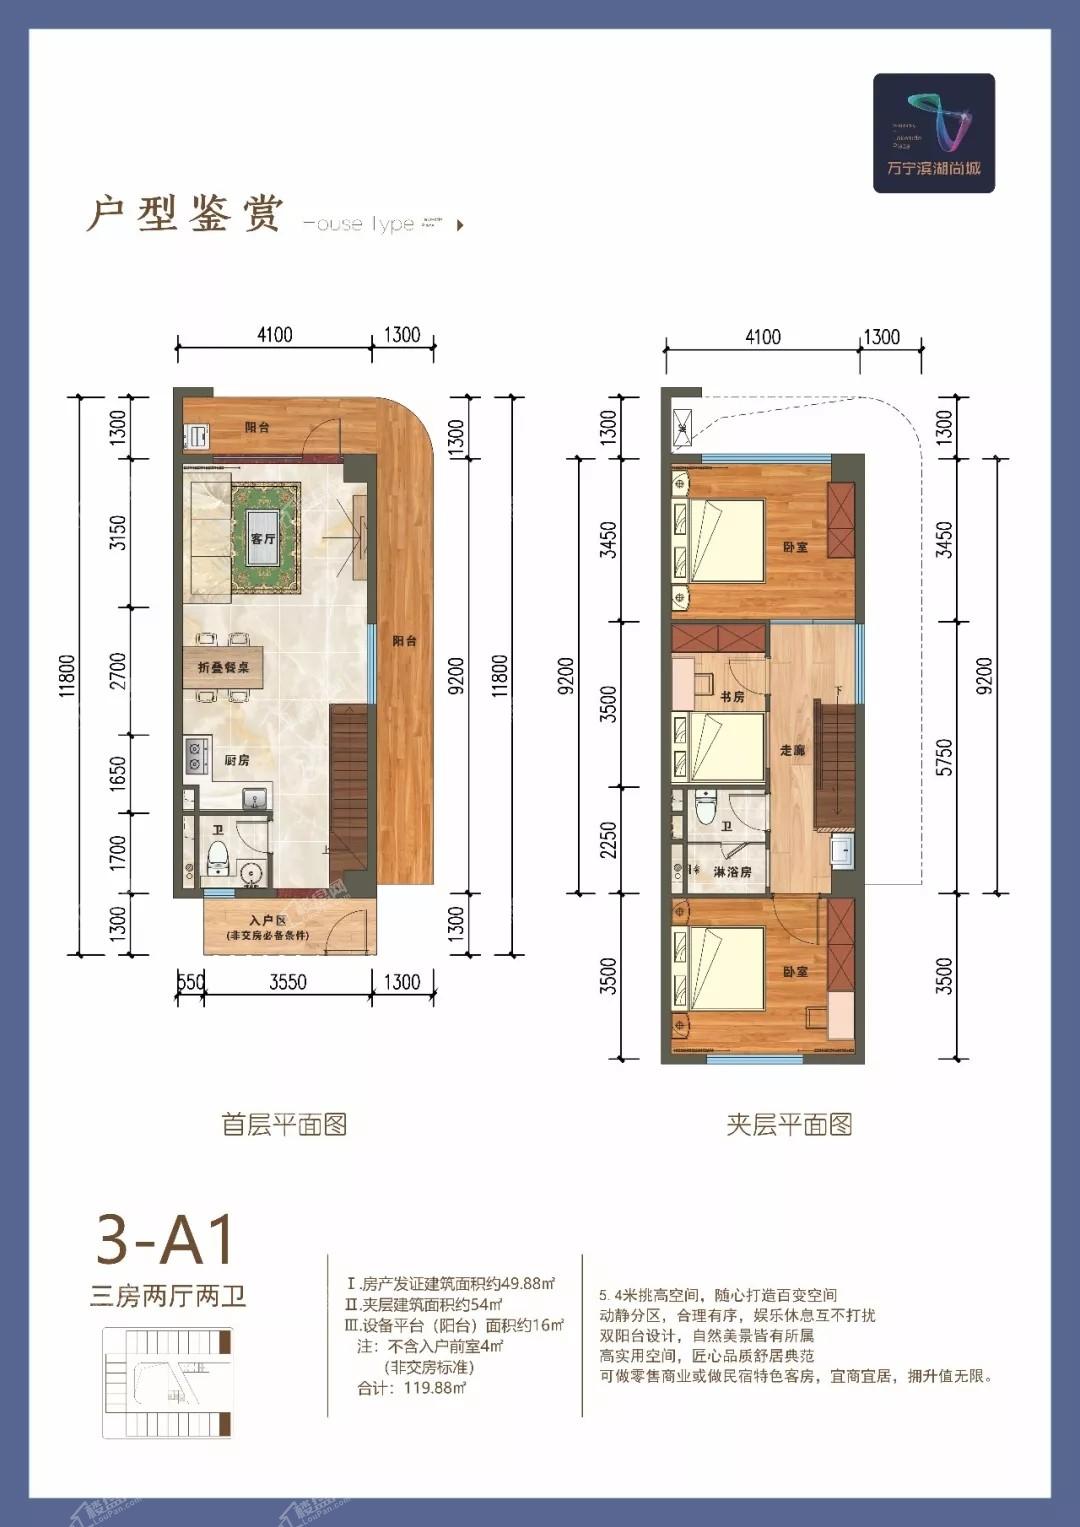 3-A1户型3房2厅2卫 49.88平方米